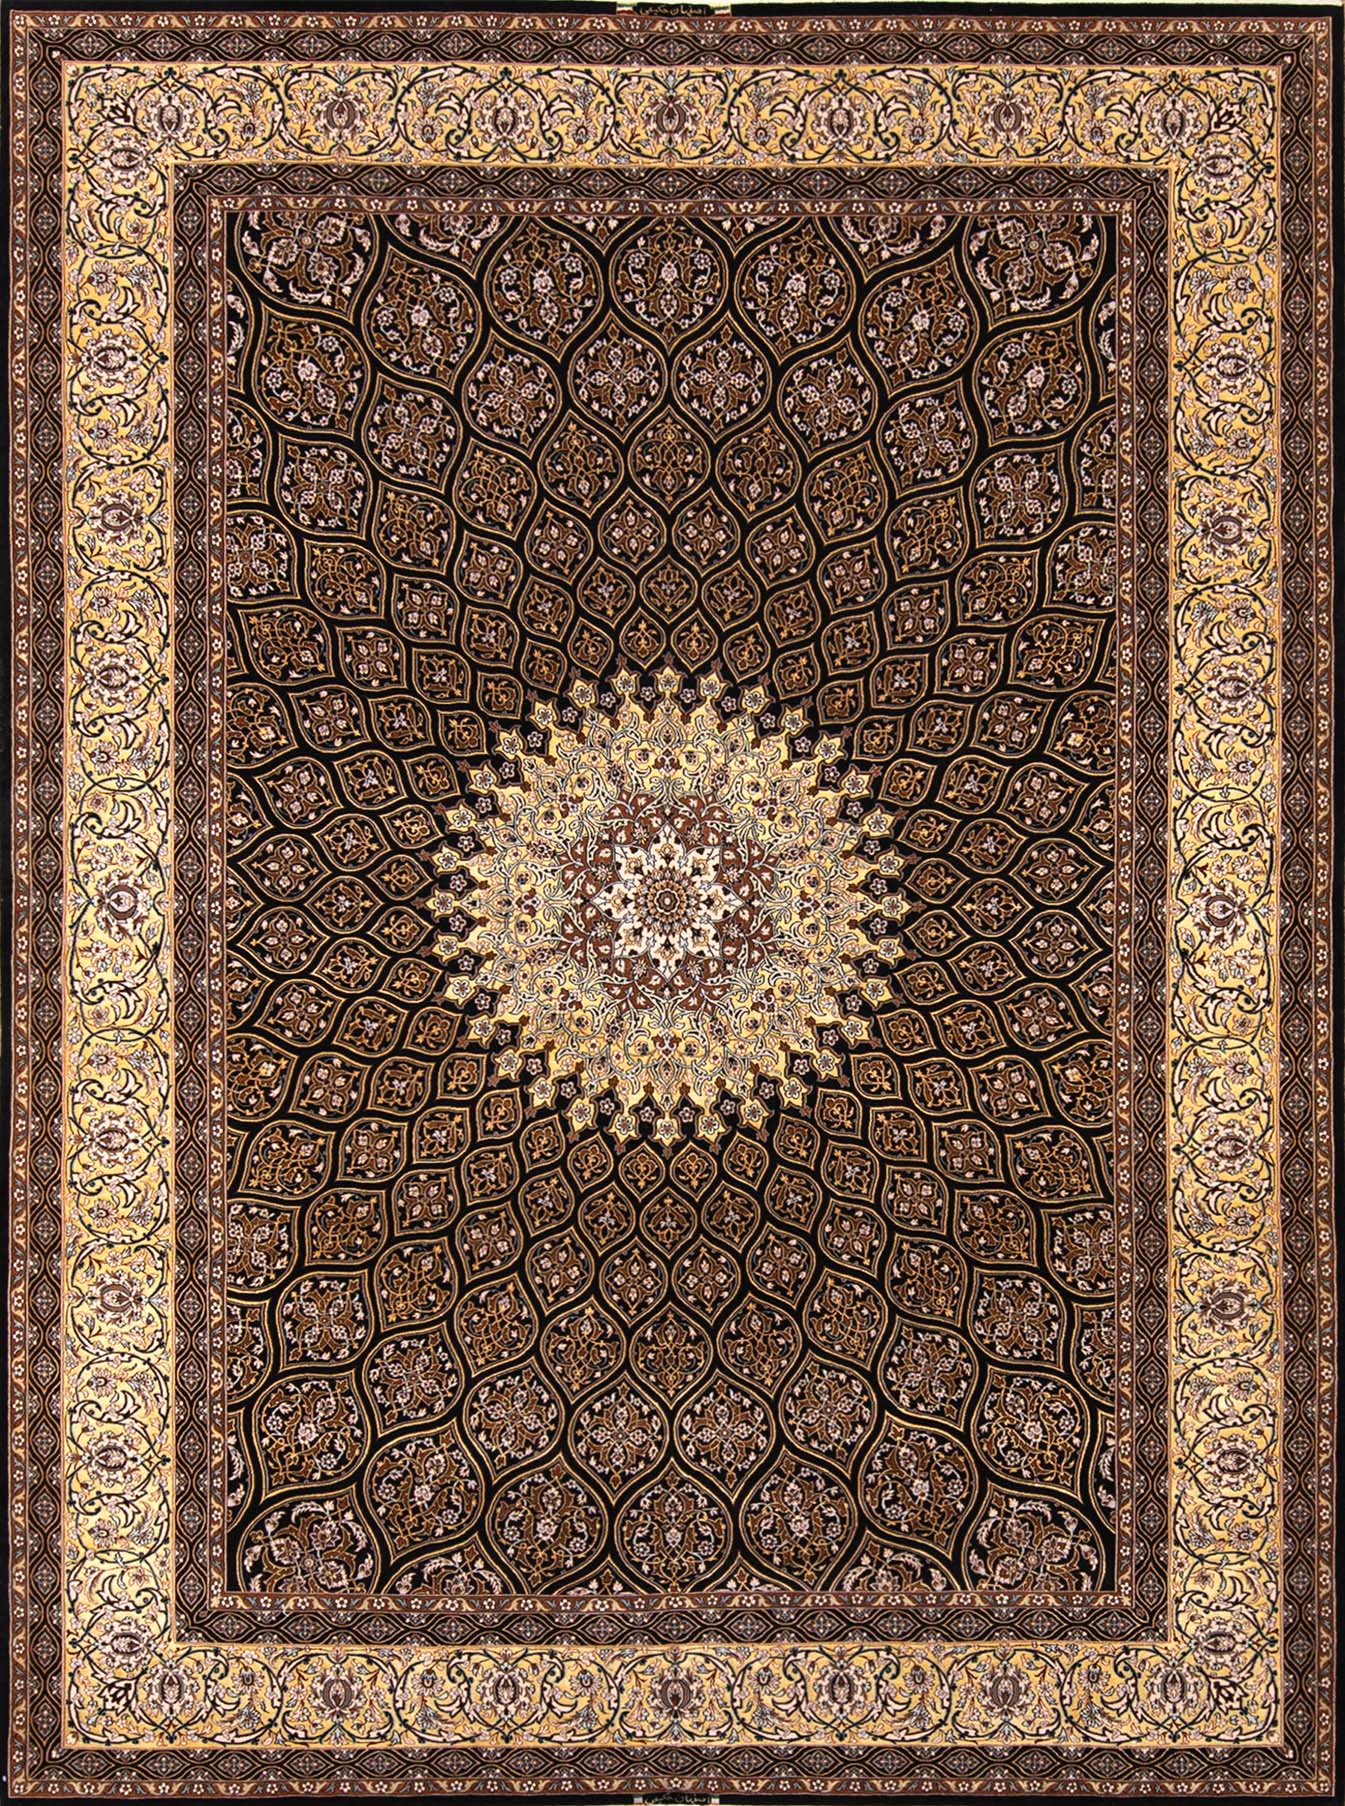 Black and gold color Persian Isfahan rug. Gonbadi design. Size 8.3x11.8